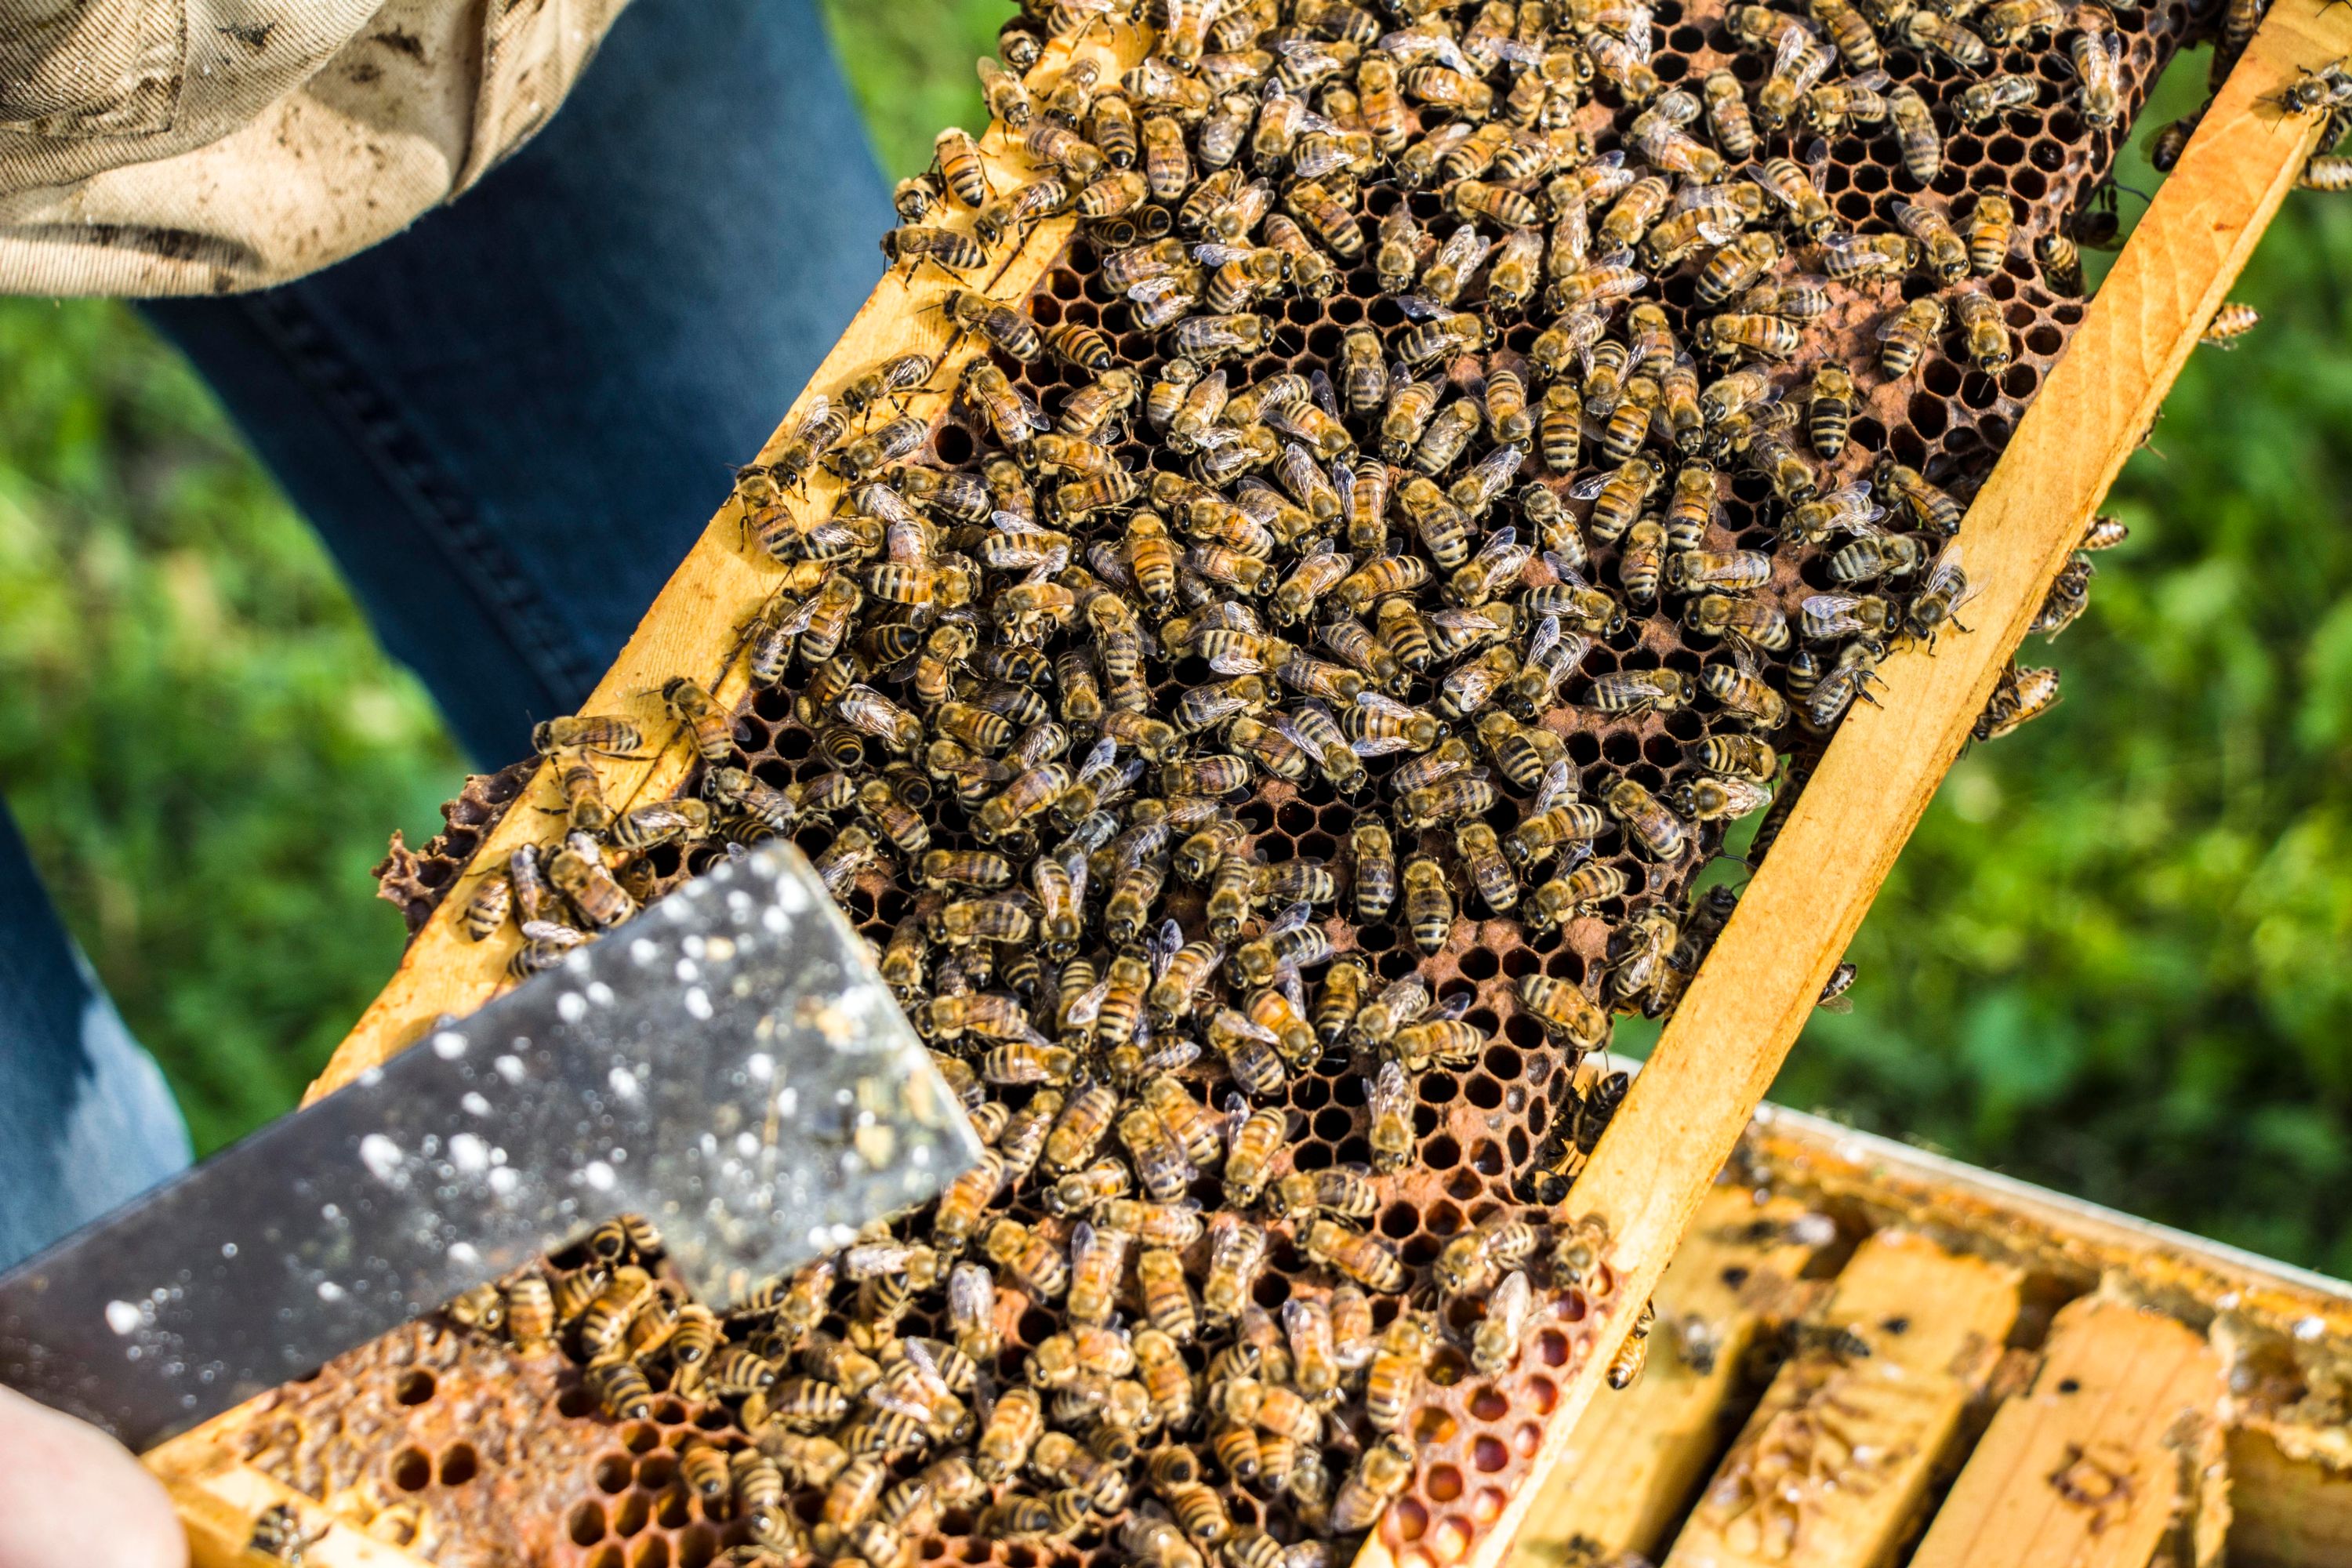 Beekeeper managing a hive